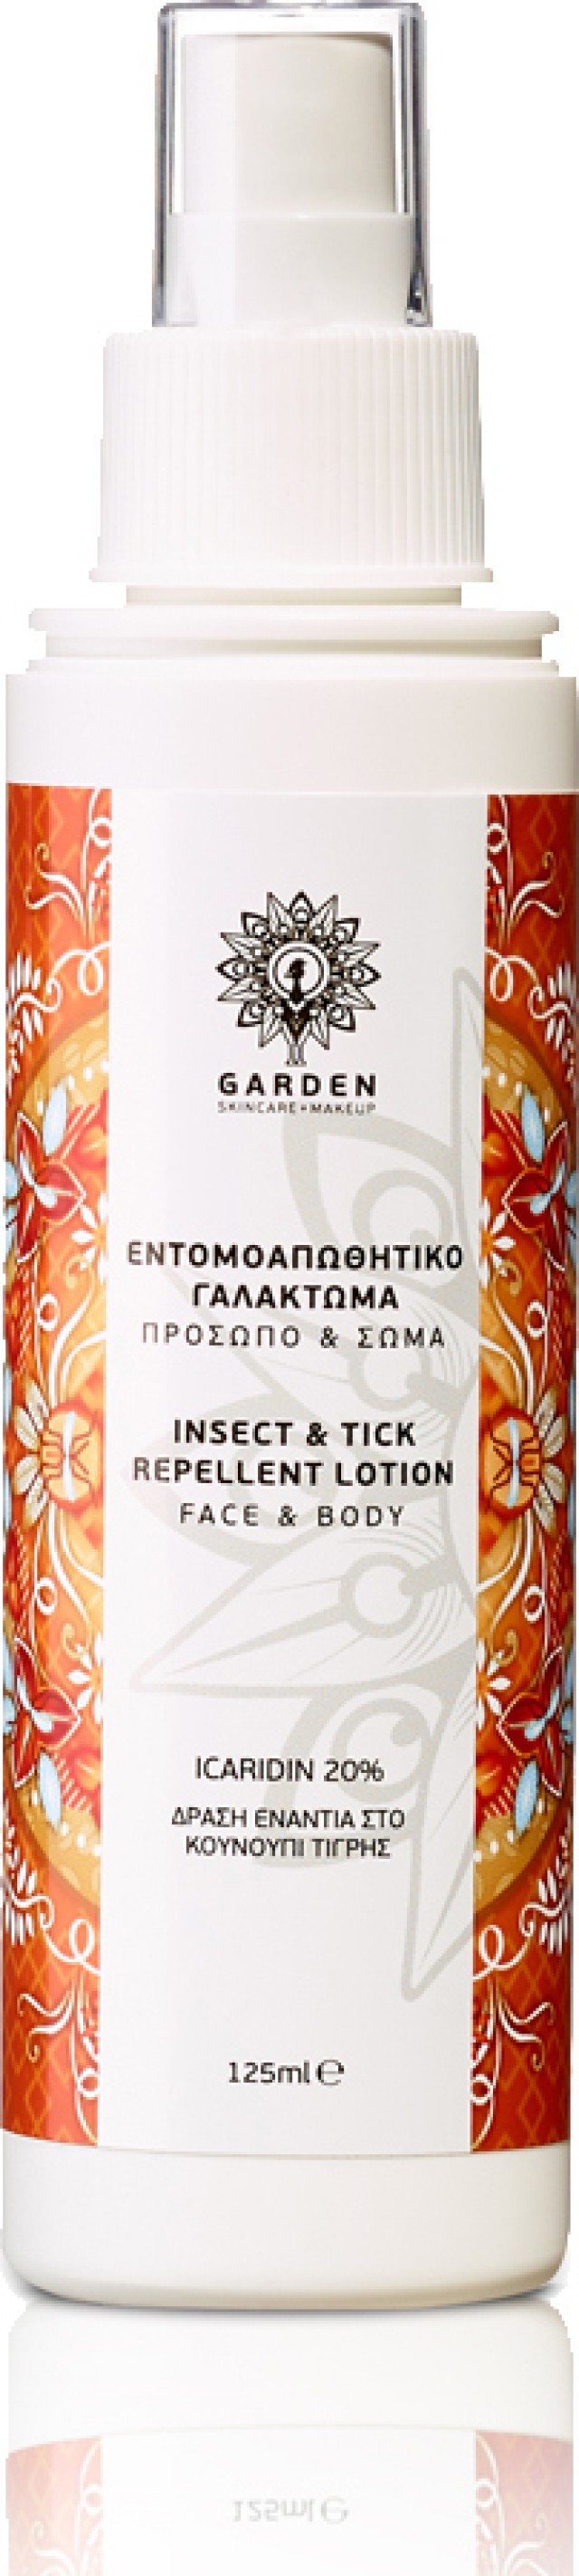 Garden Εντομοαπωθητικό Γαλάκτωμα Πρόσωπο & Σώμα Icaridin 20%, 125ml